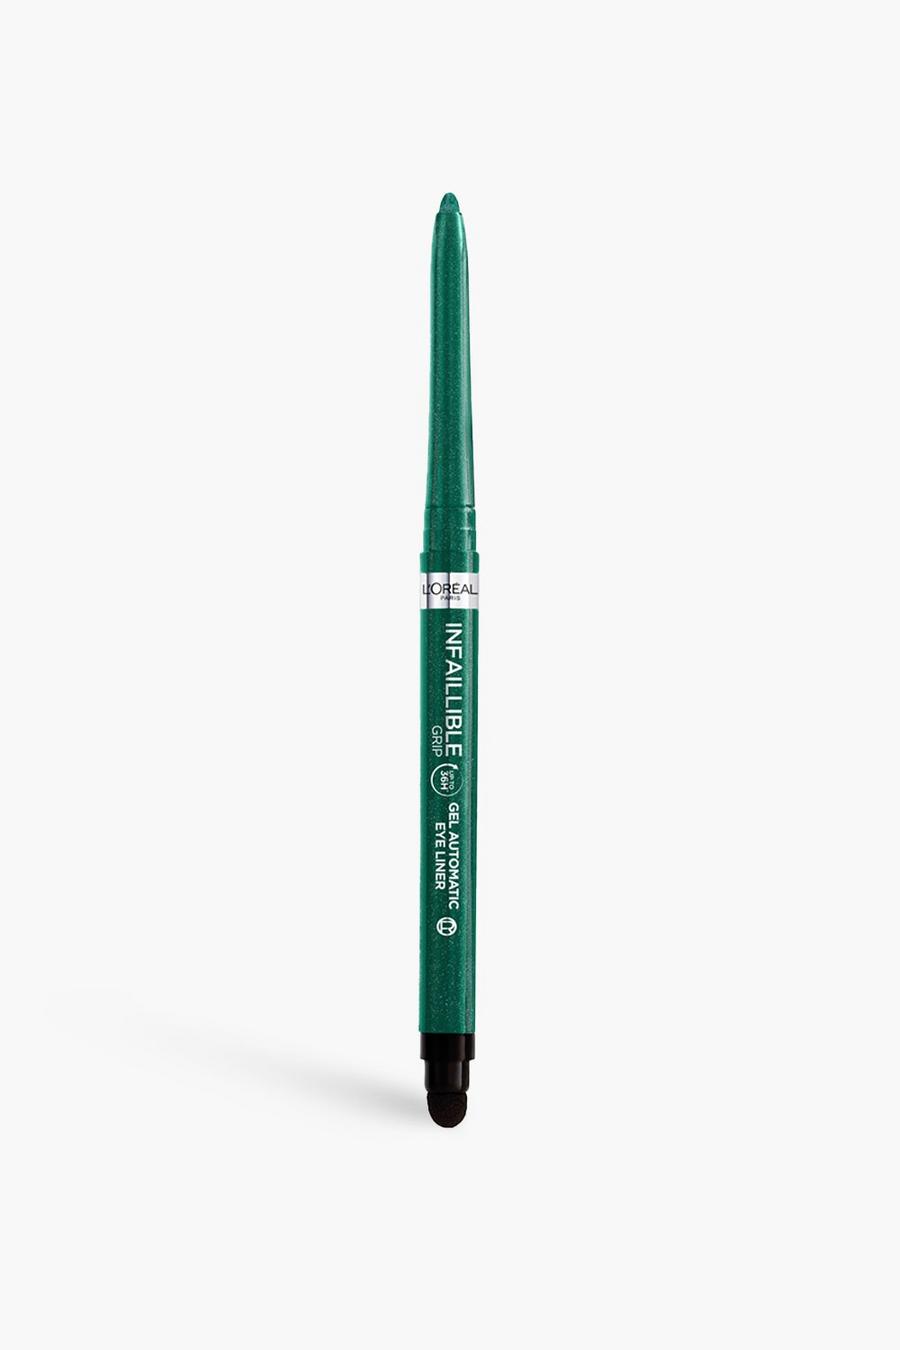 L'Oreal Paris - Eyeliner Infaillible Grip - Tenue 36h, Green image number 1